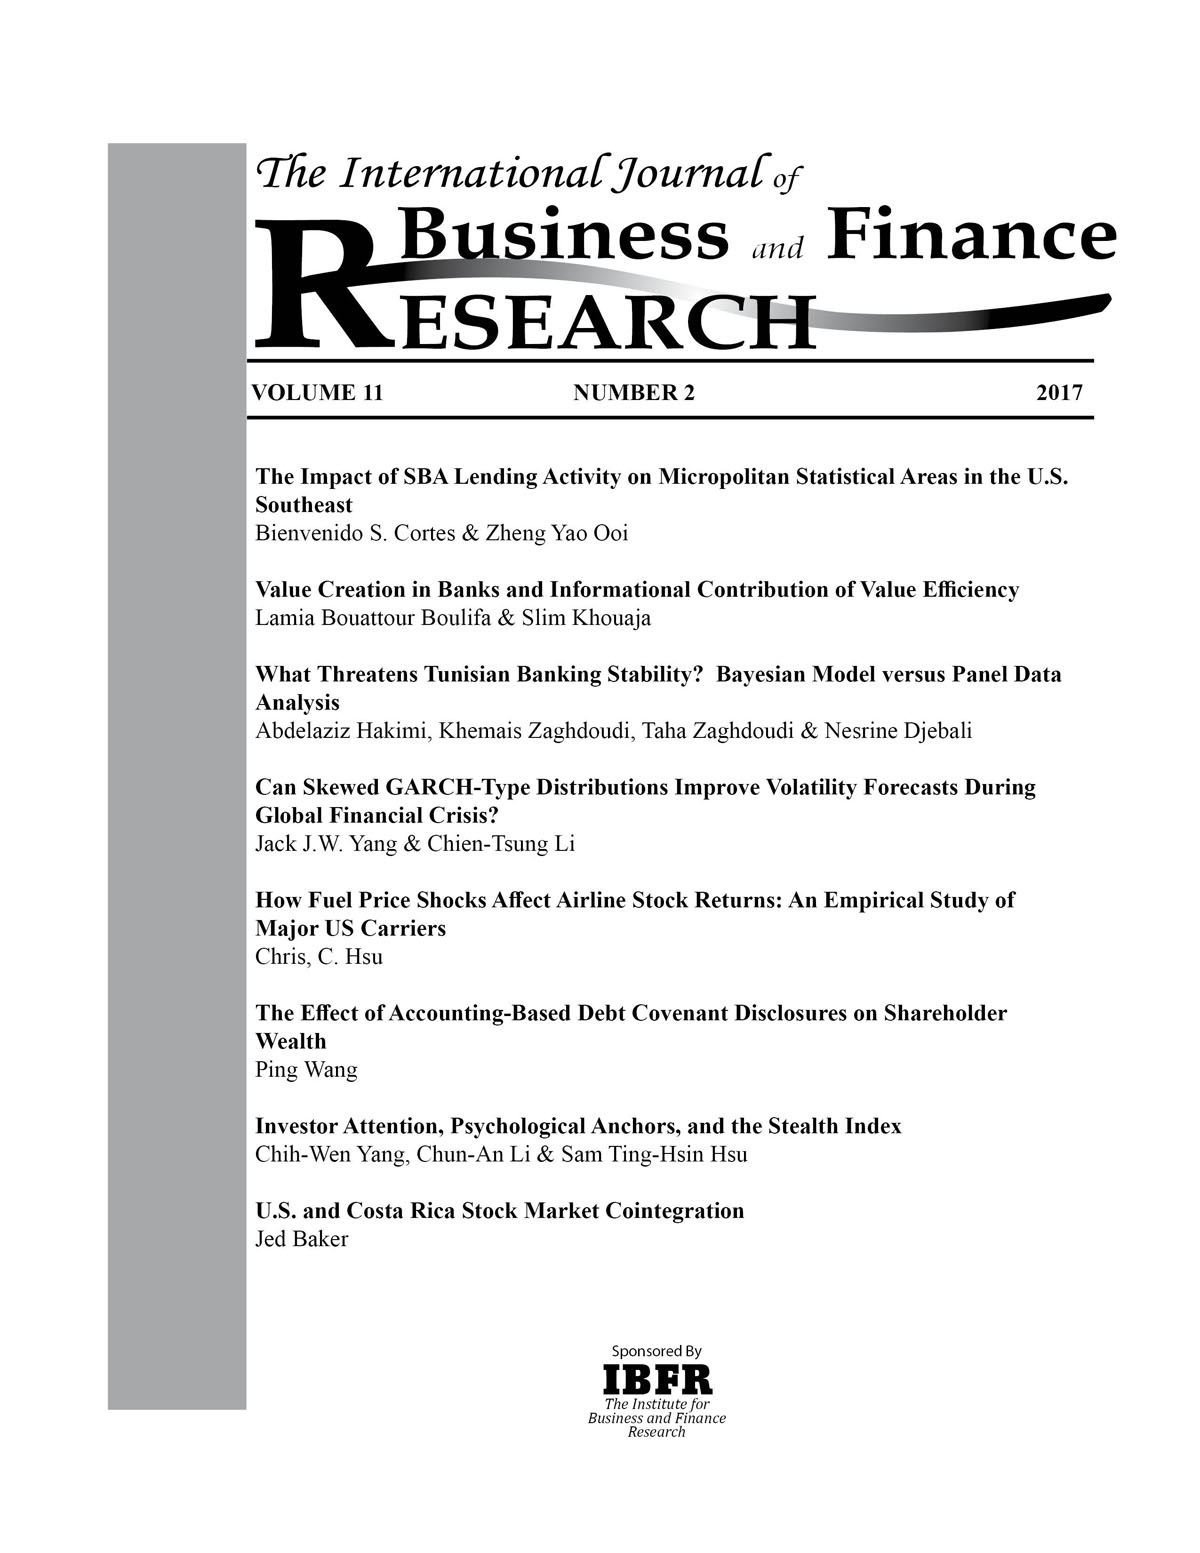 research topics on international finance